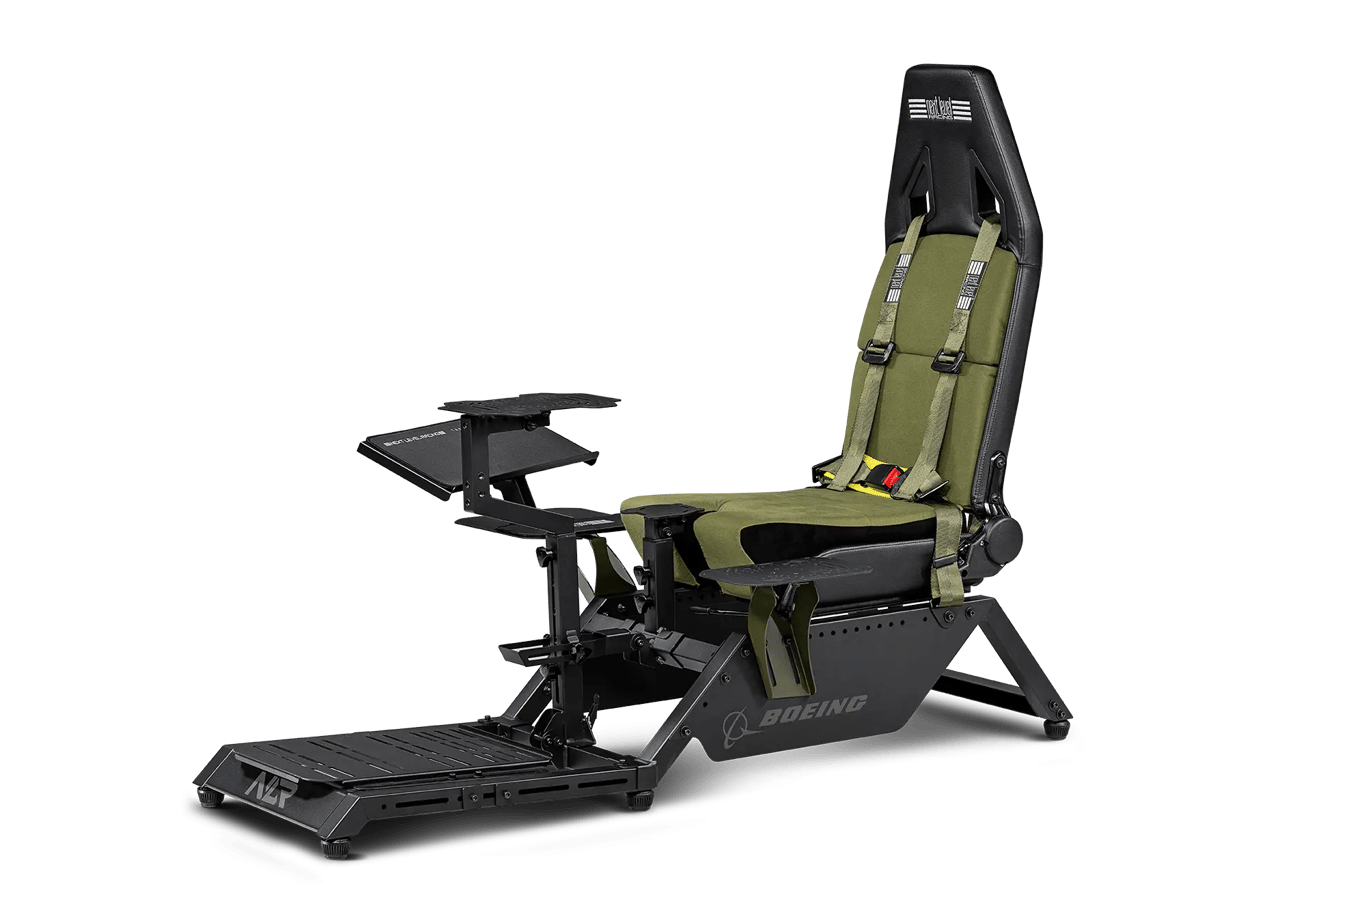 Next Level Racing Flight Simulator: Boeing Military Edition 模擬飛行架 - 軍綠色特別版 (波音官方授權)